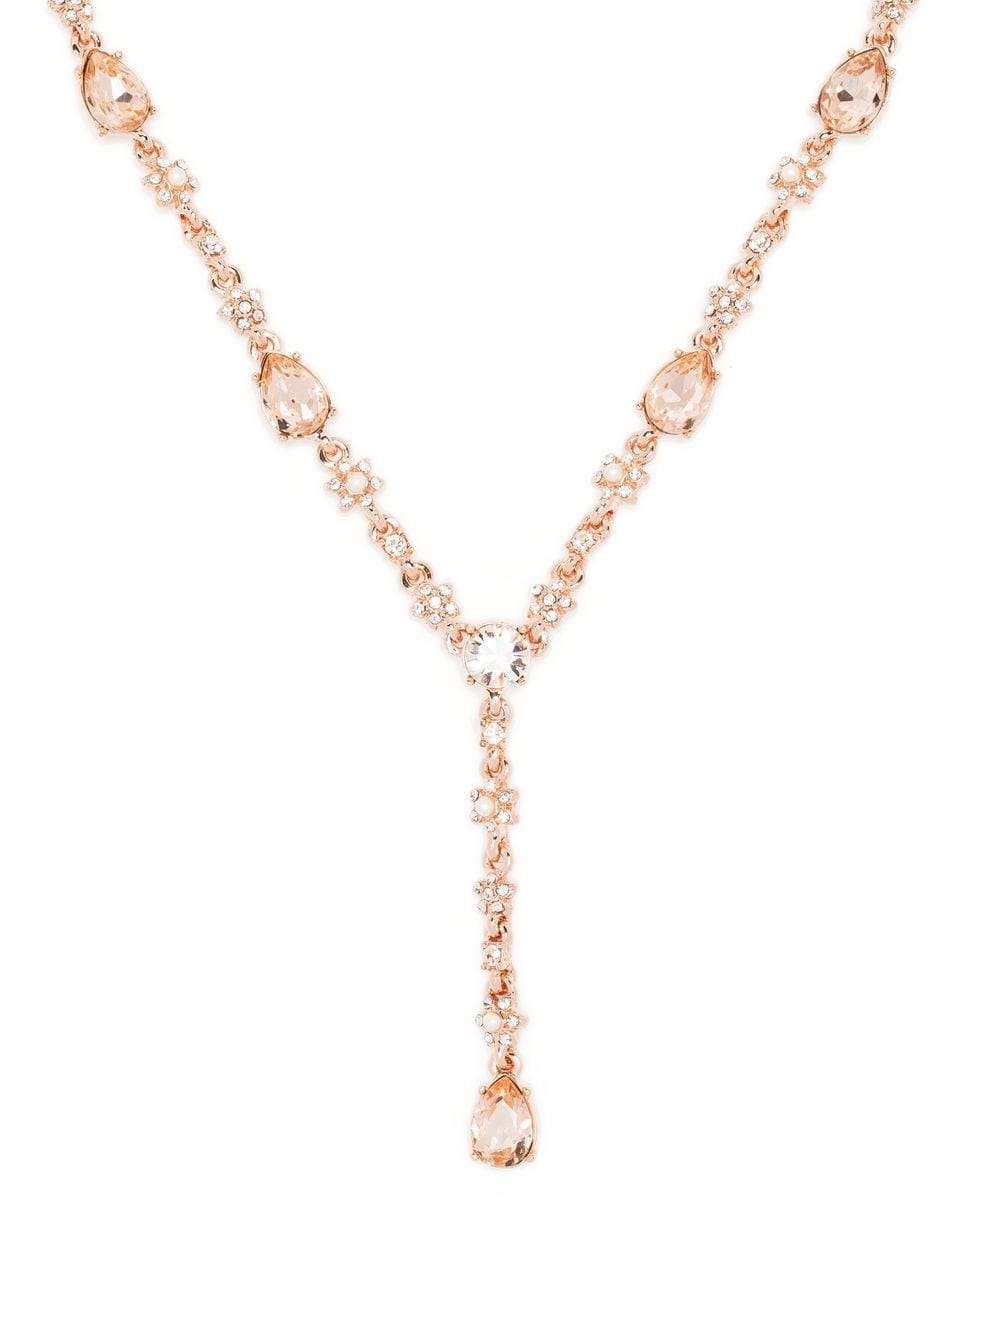 Marchesa Notte Bridesmaids crystal-drop necklace - Gold von Marchesa Notte Bridesmaids